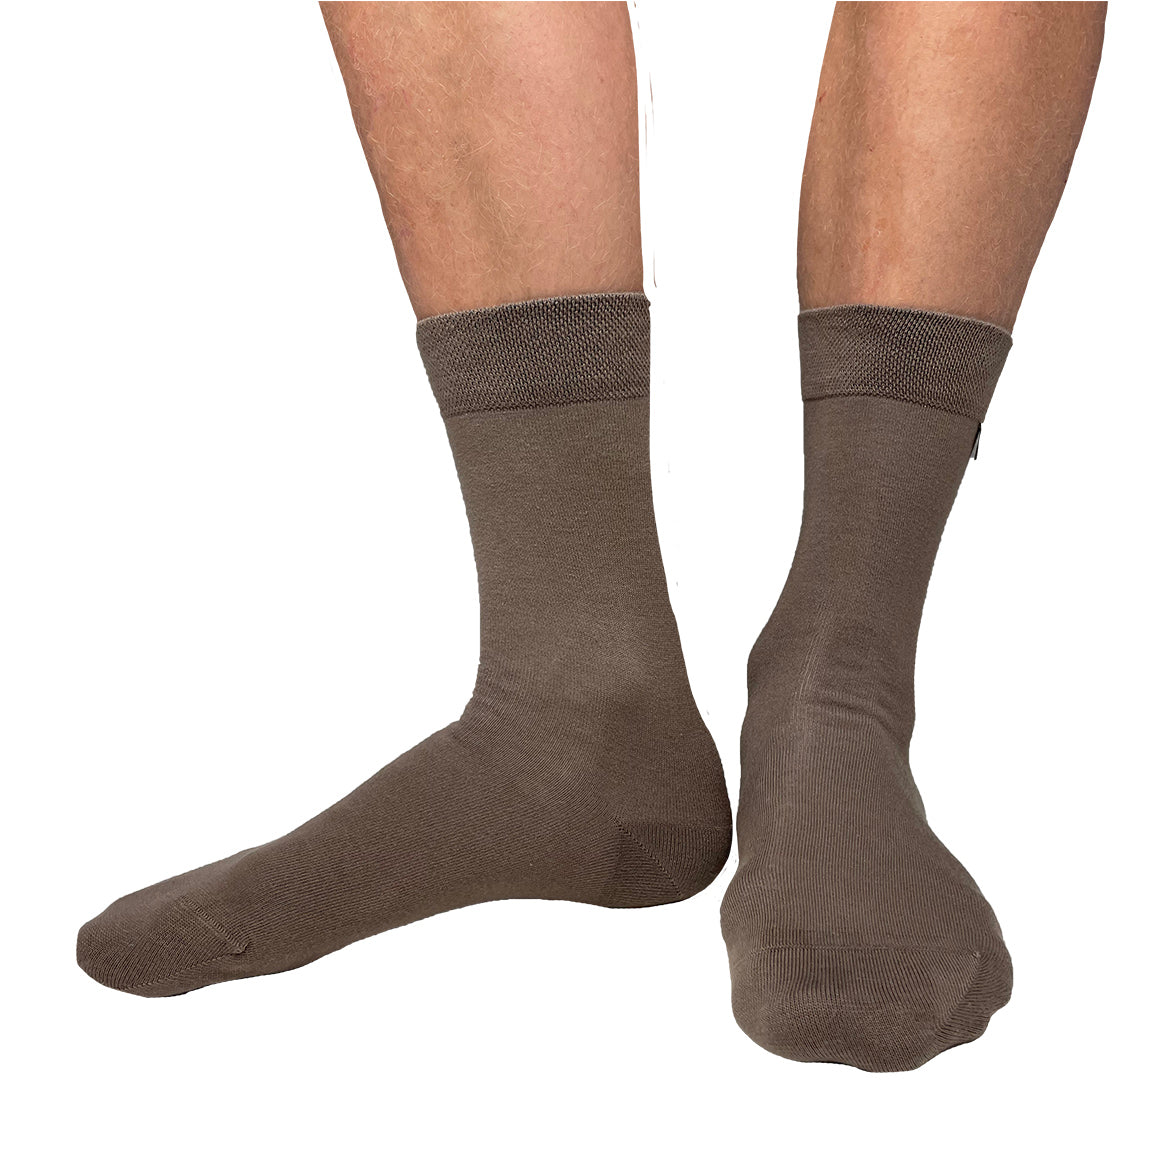 Brown socks from Tag Socks